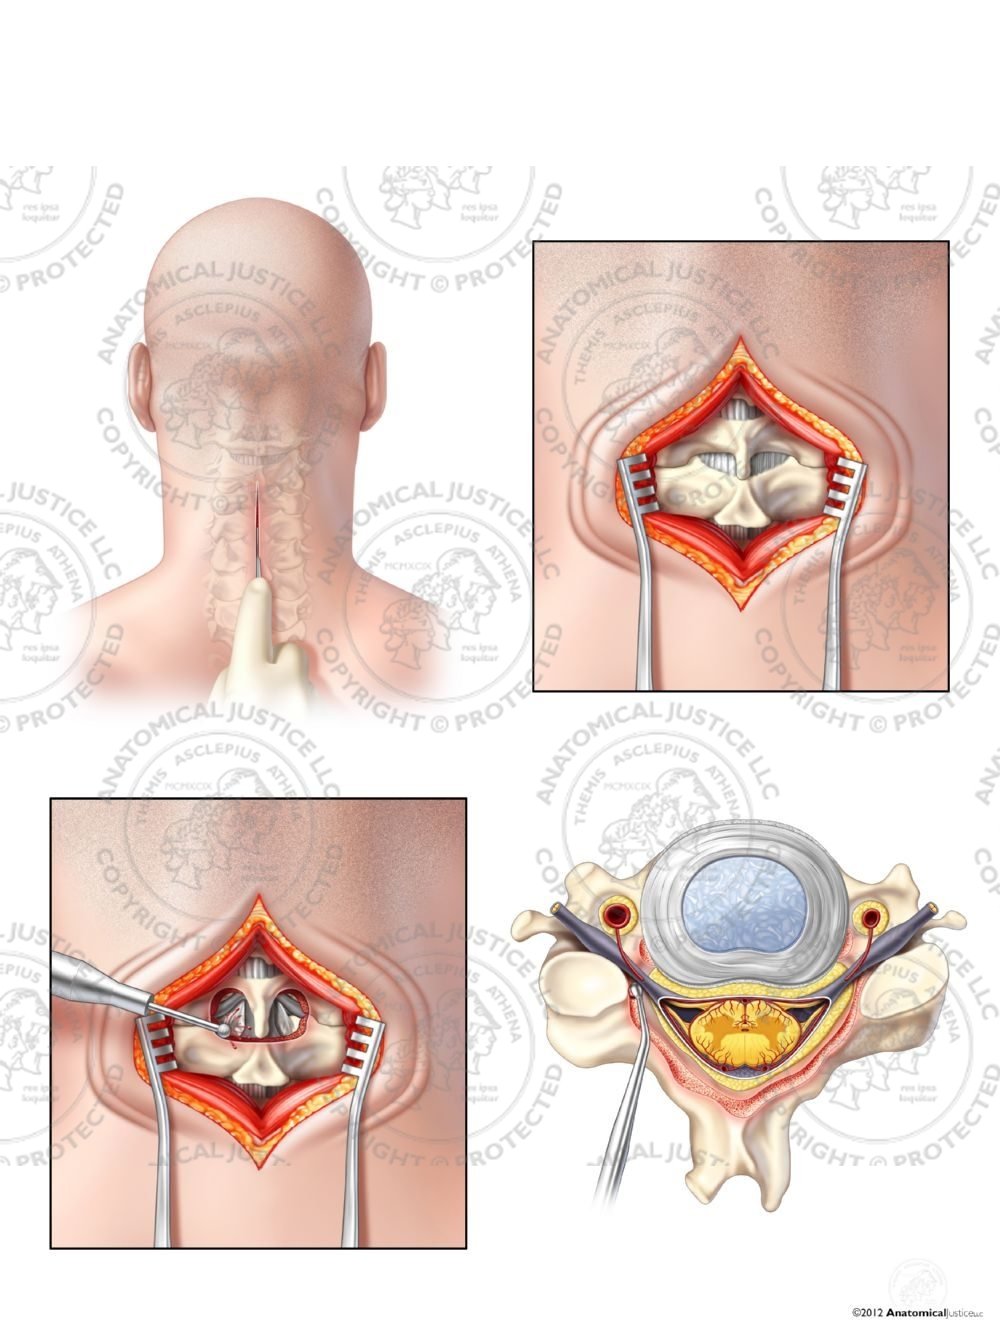 C3-4 Posterior Cervical Hemilaminectomy with Bilateral Foraminotomies – No Text